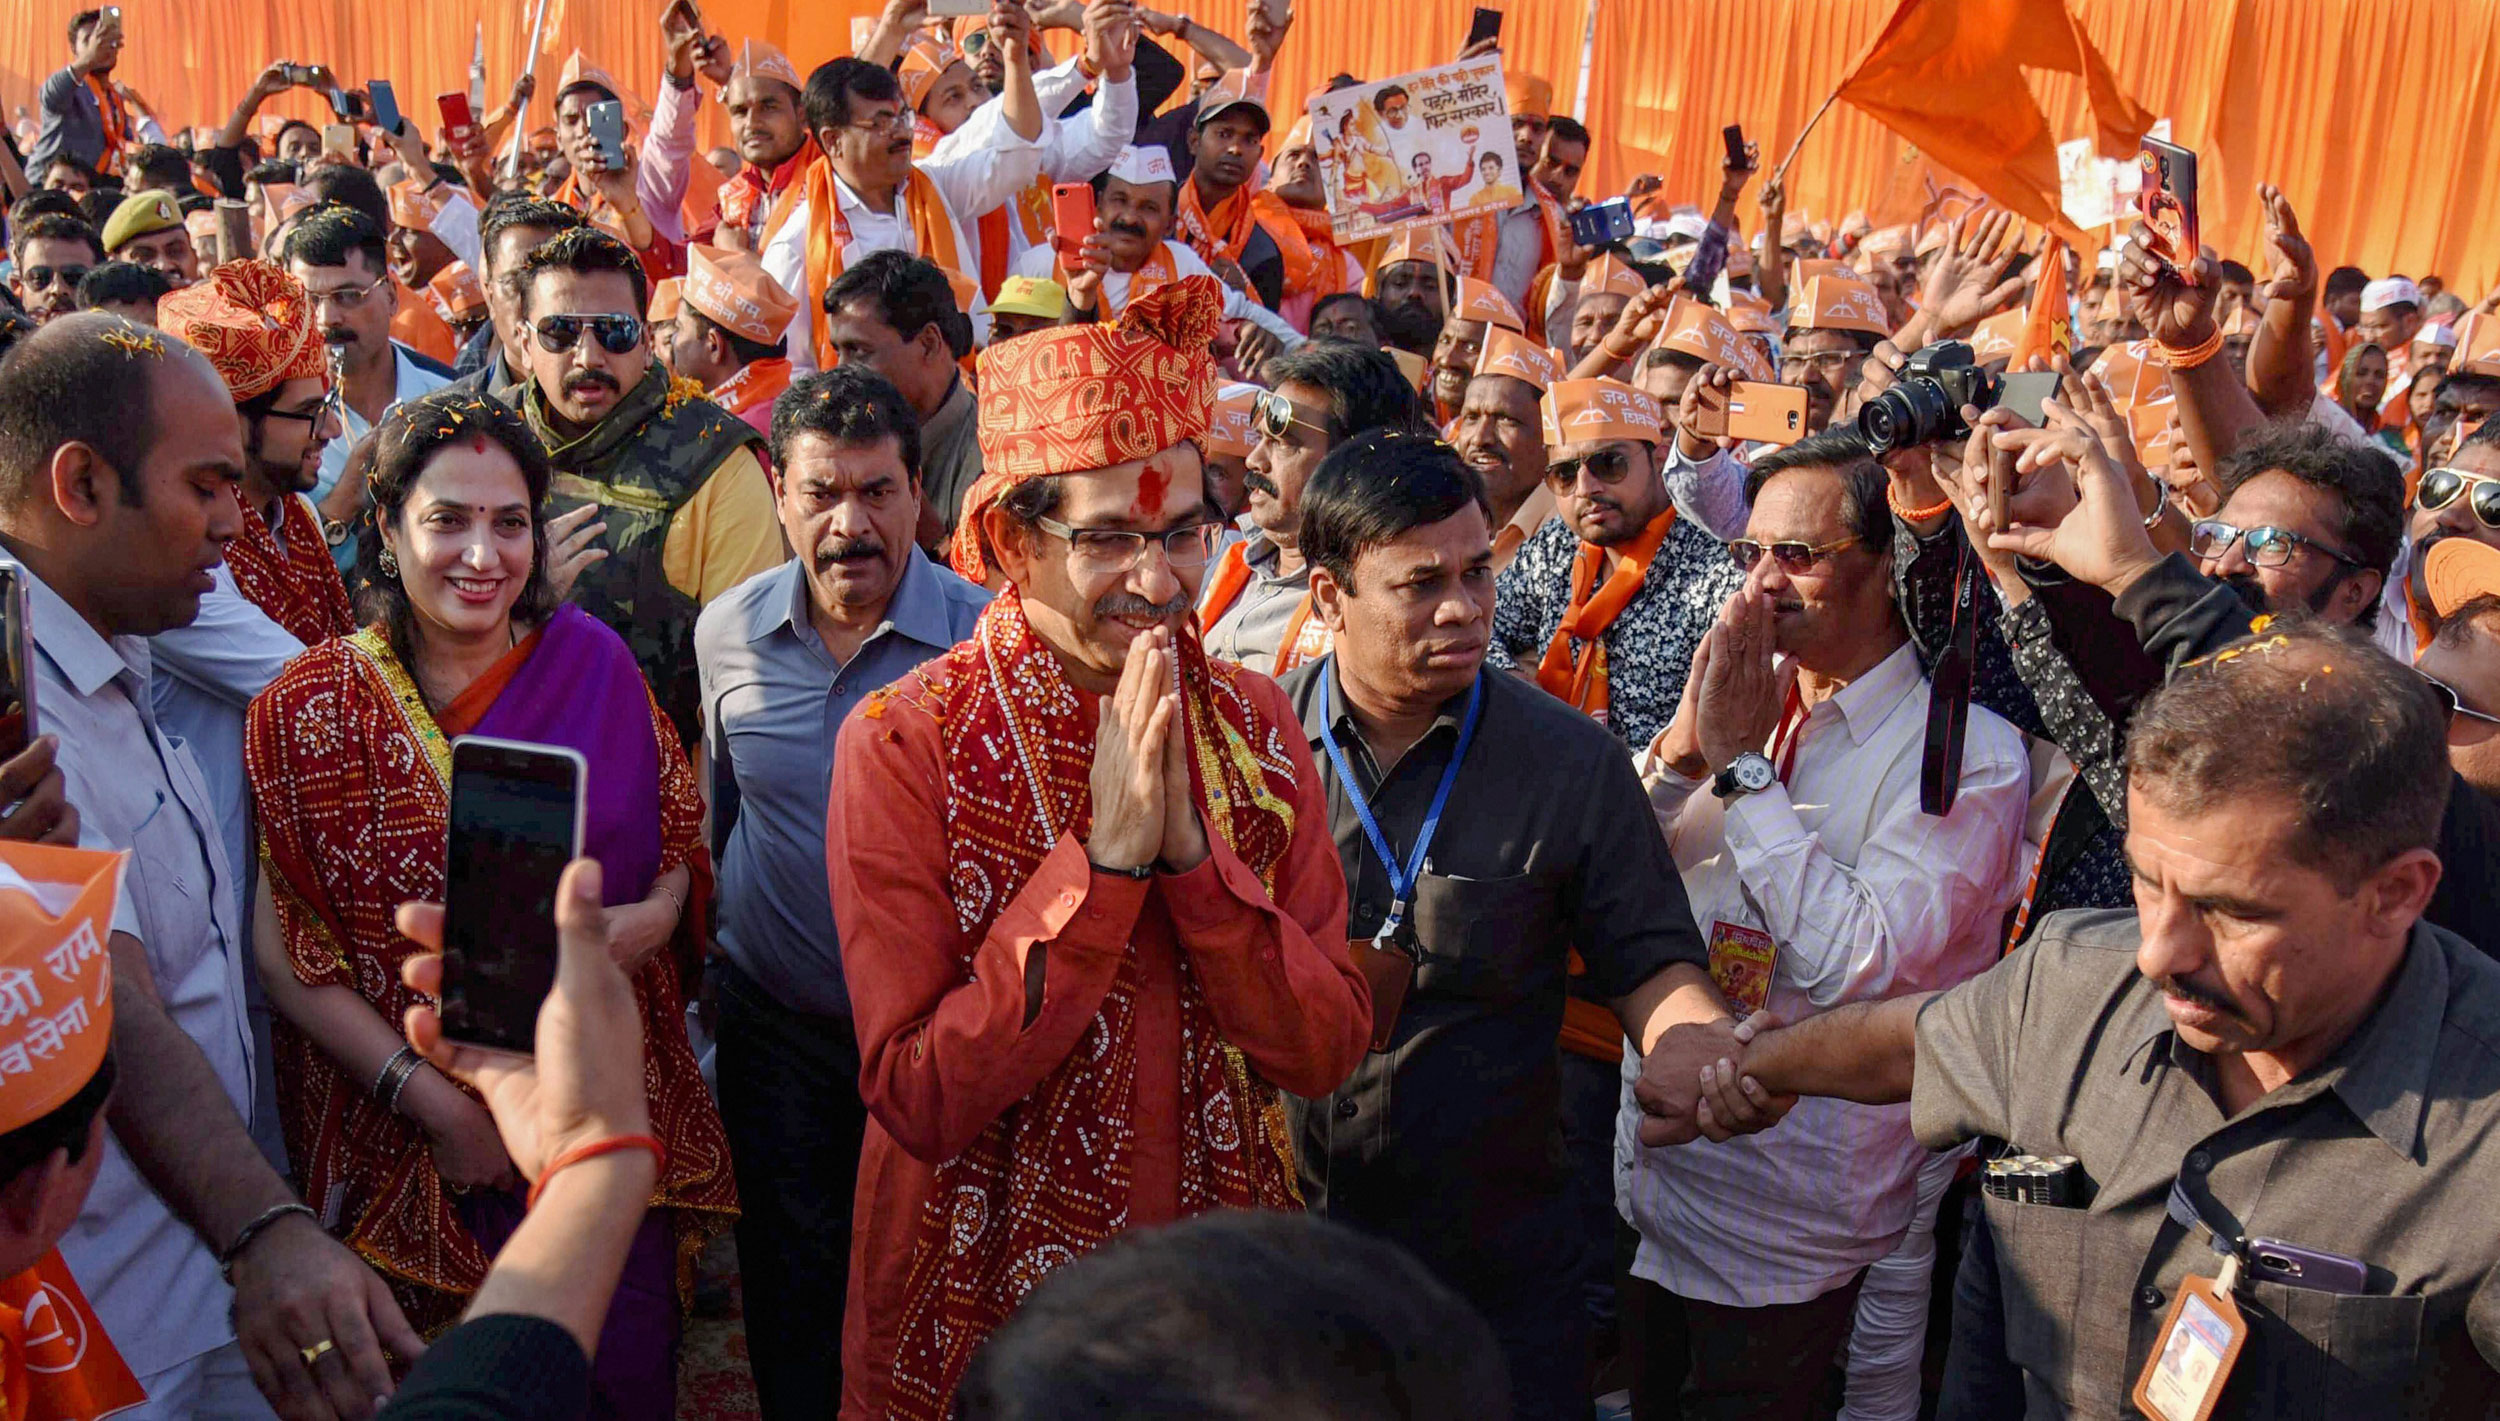 Shiv Sena chief Uddhav Thackeray, Yuva Sena chief Aditya Thackeray and Rashmi Thackeray arrive at Lakshman Kila ahead of the Ram Temple event, in Ayodhya, on Saturday. 